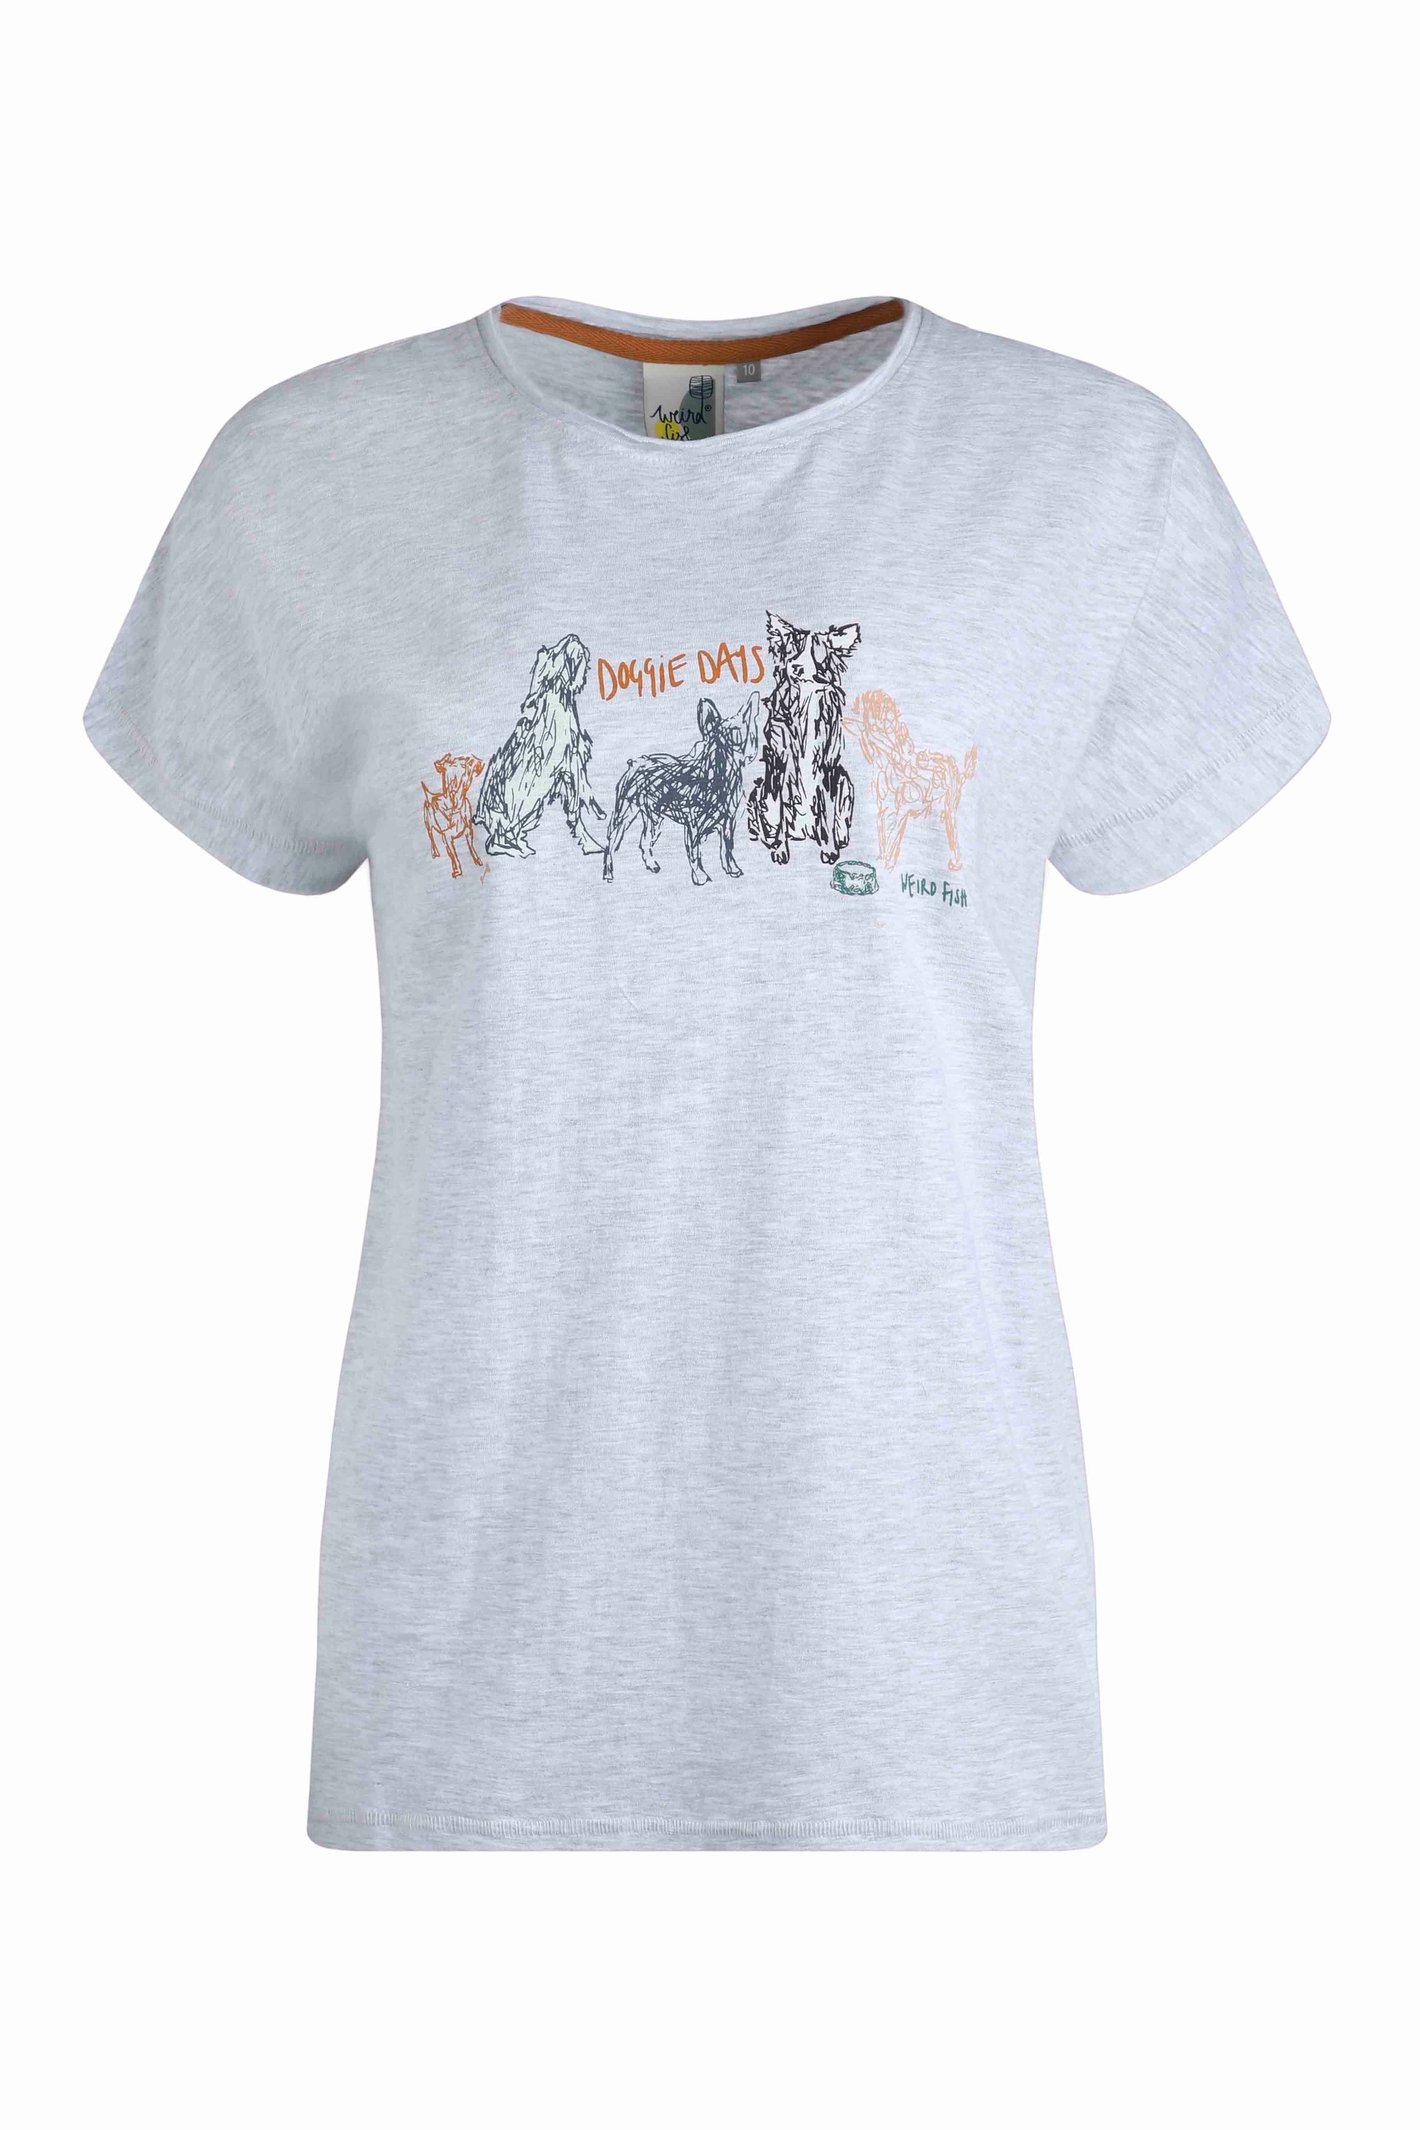 Weird Fish Doggie Day Organic Graphic T-Shirt Grey Marl Size 14